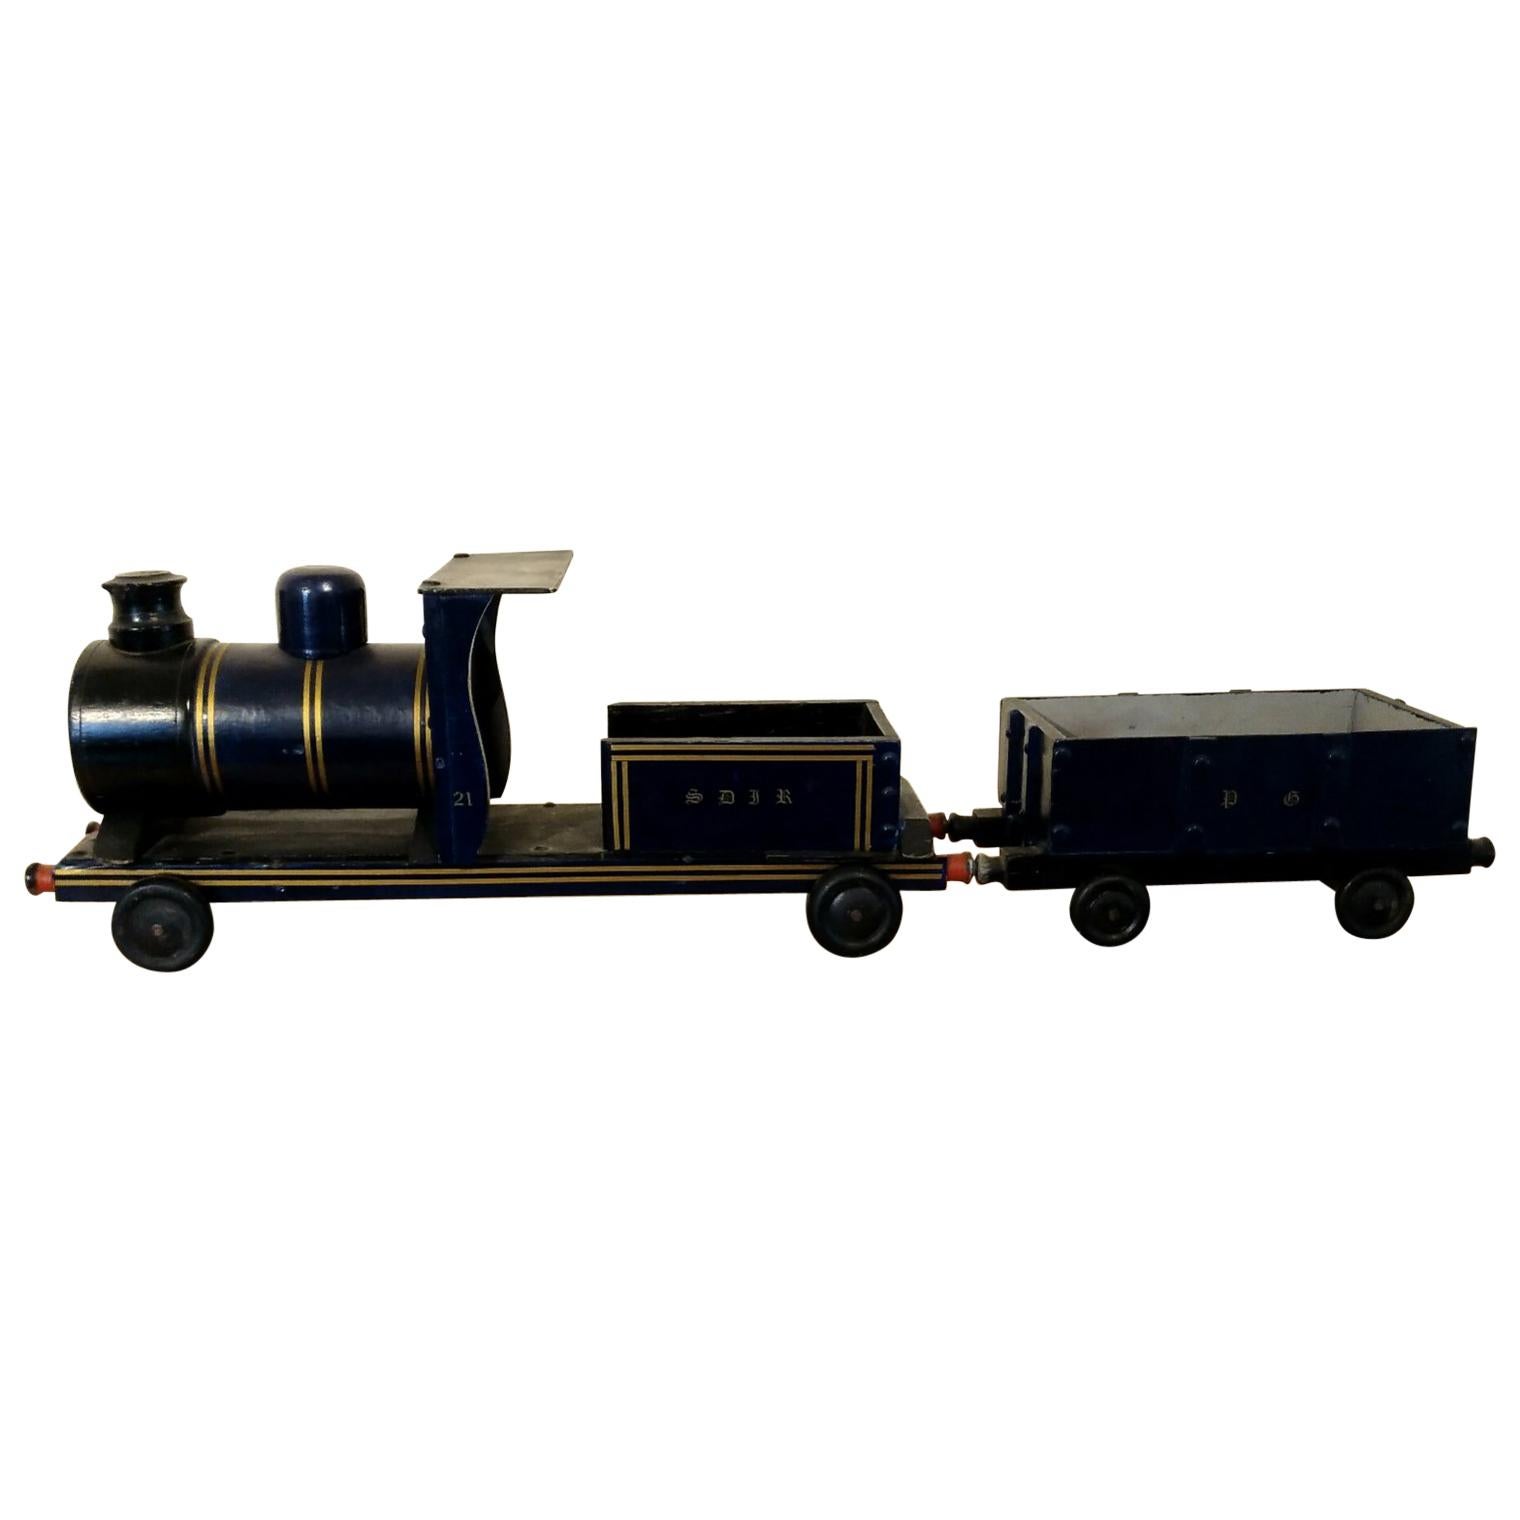 English Toy Train with Cargo Car, 1940